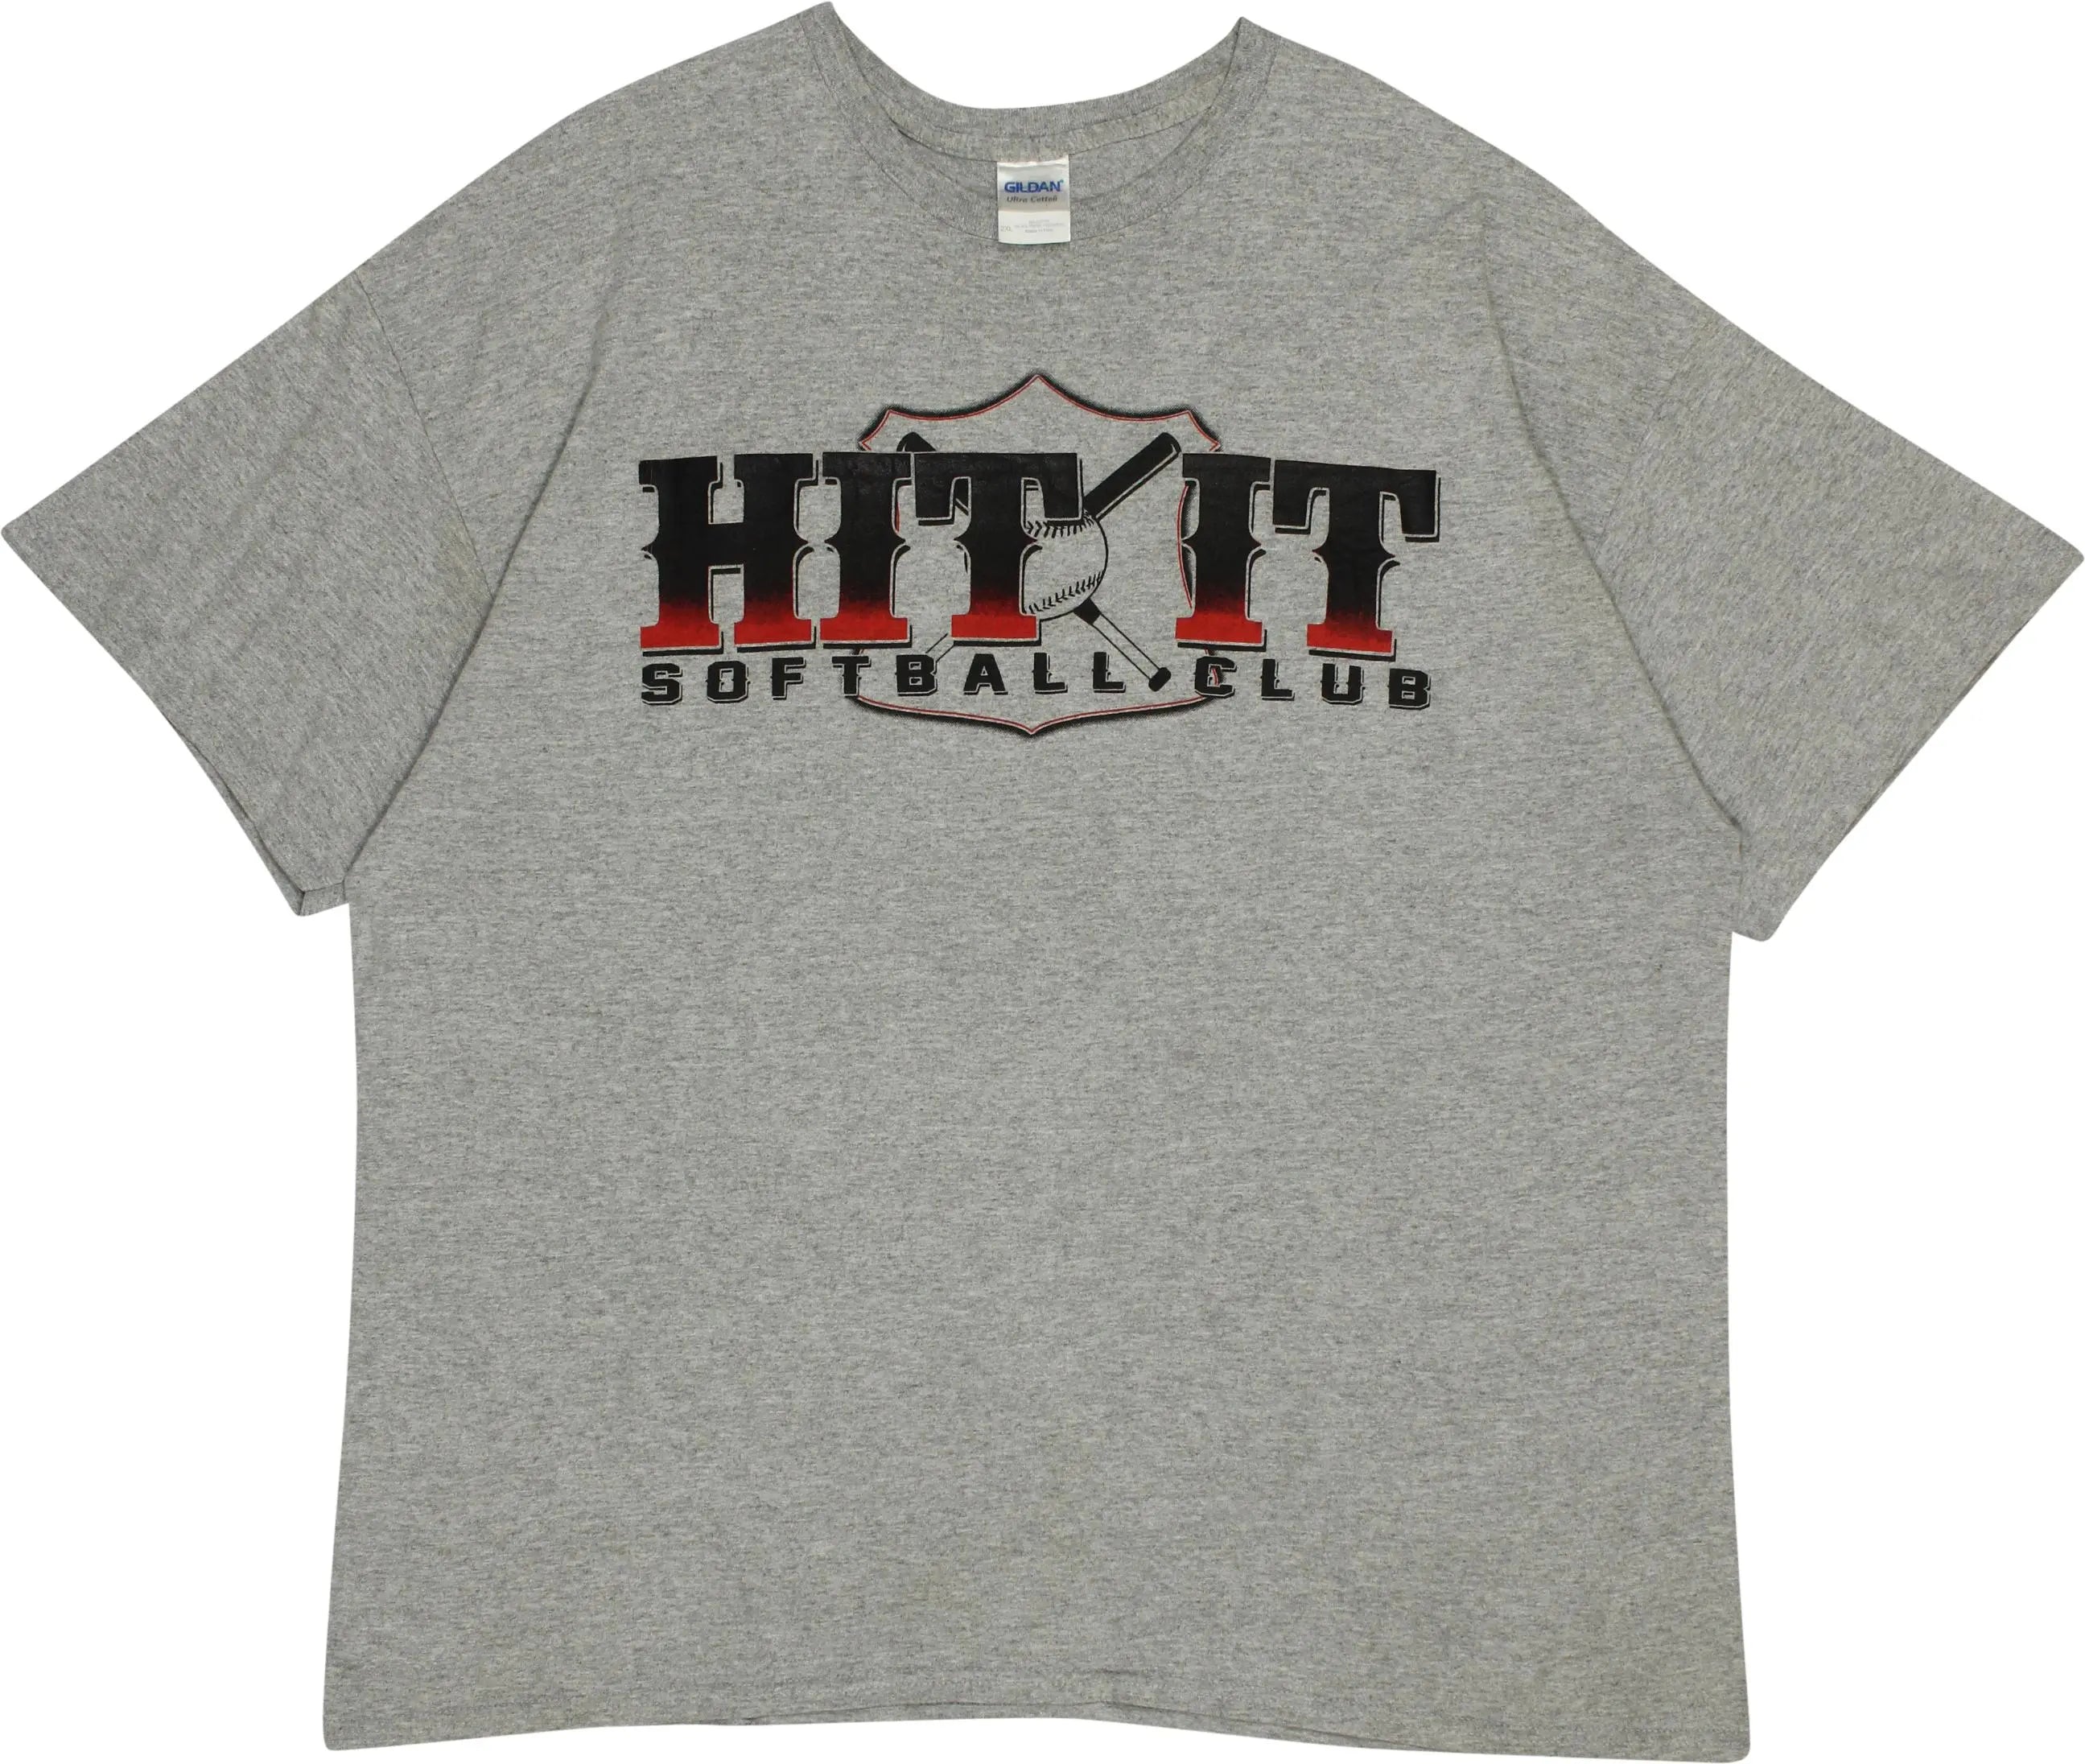 Gildan - 'Hit It' Softball Club T-Shirt- ThriftTale.com - Vintage and second handclothing